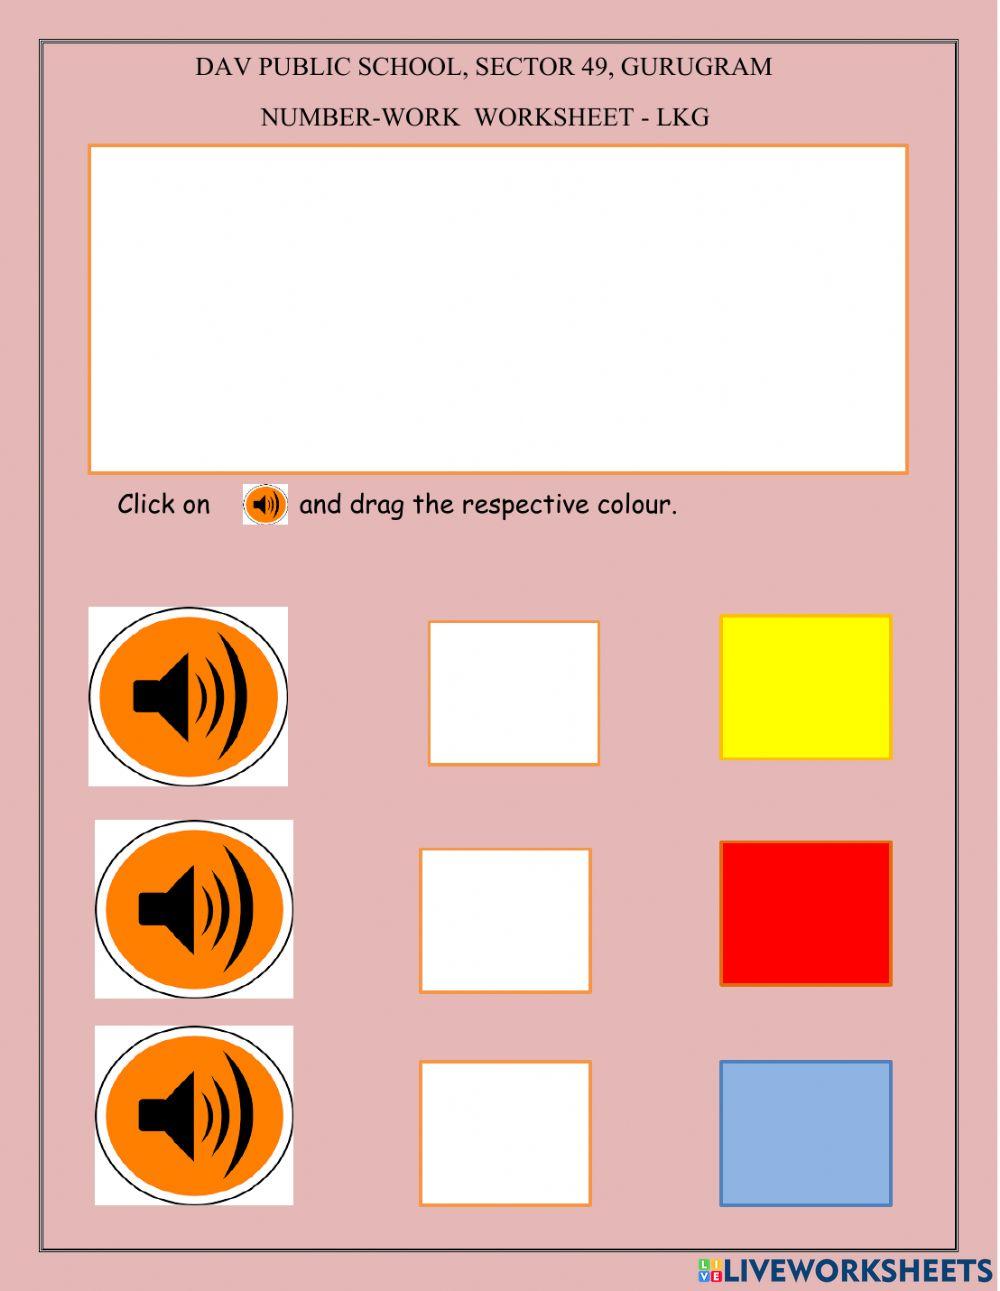 Primary colours